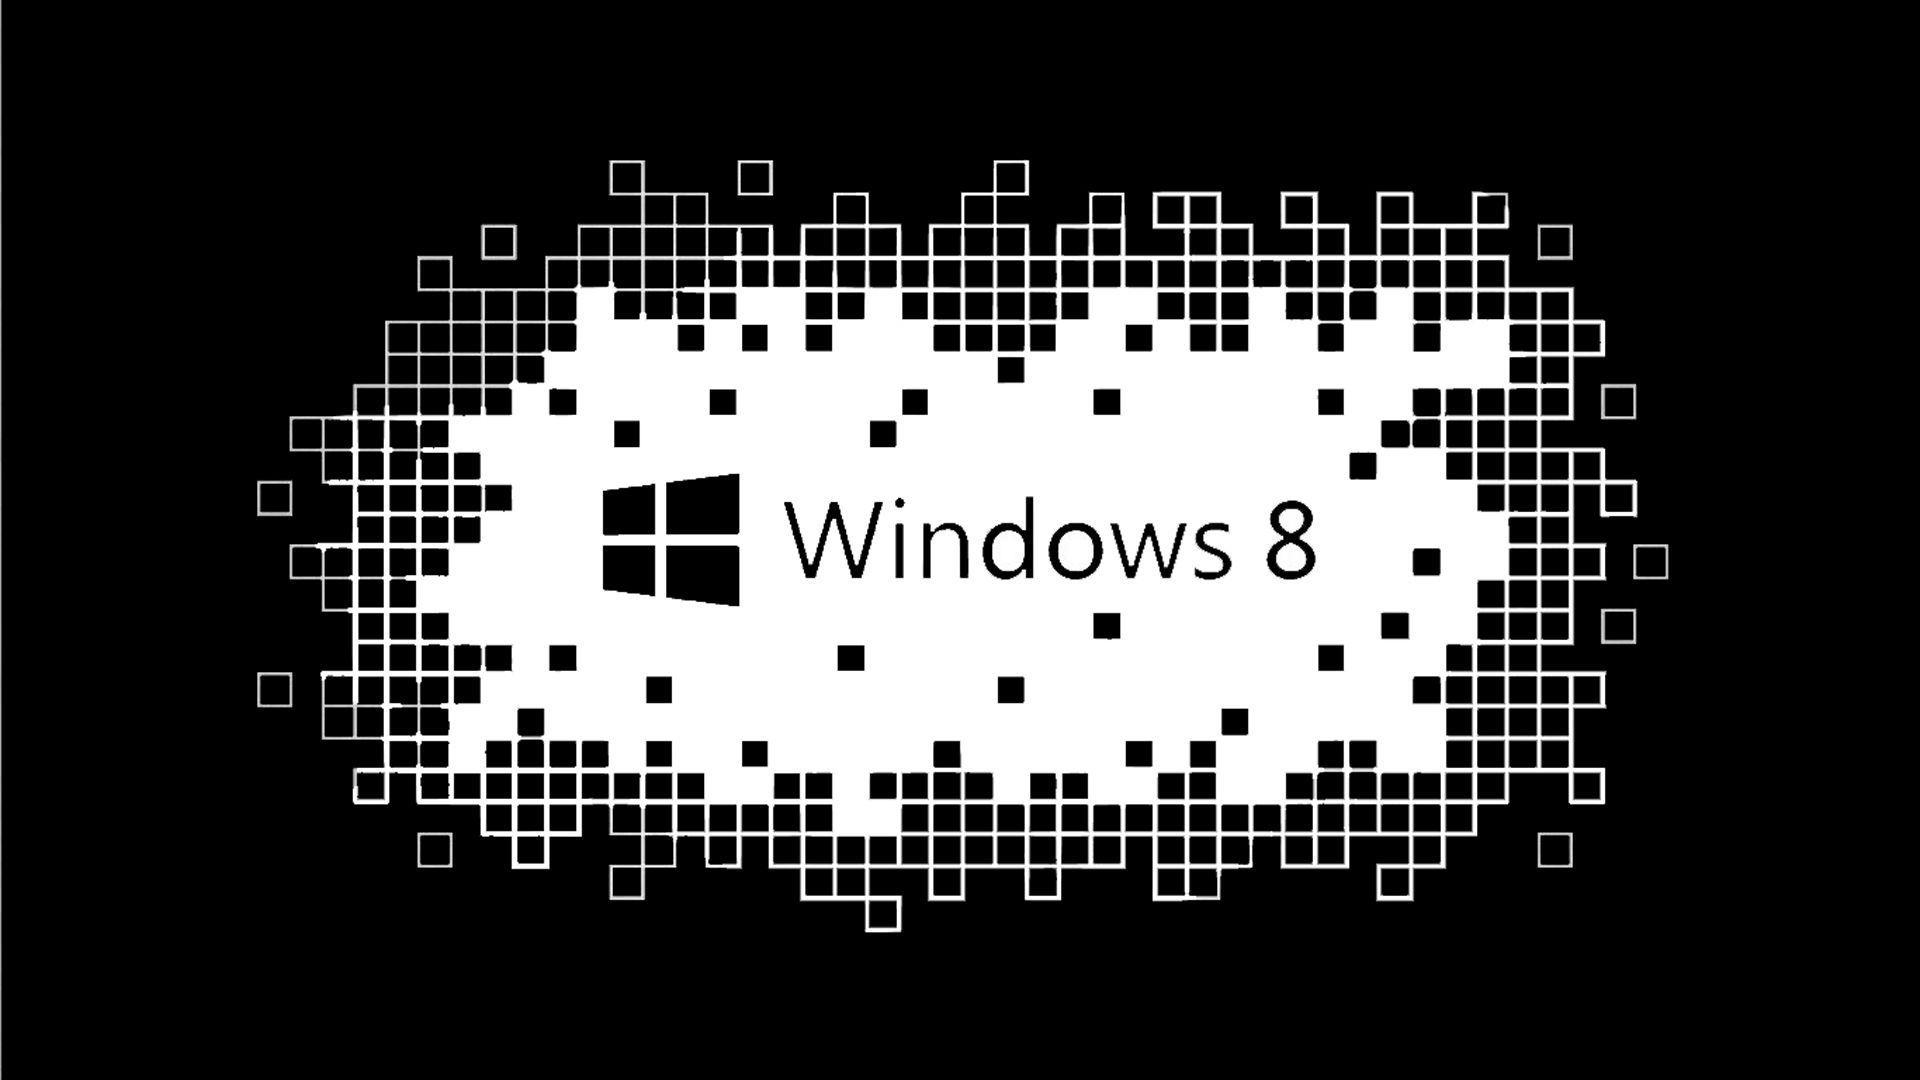 Technology Windows 8 Wallpaper 1920x1080 px Free Download